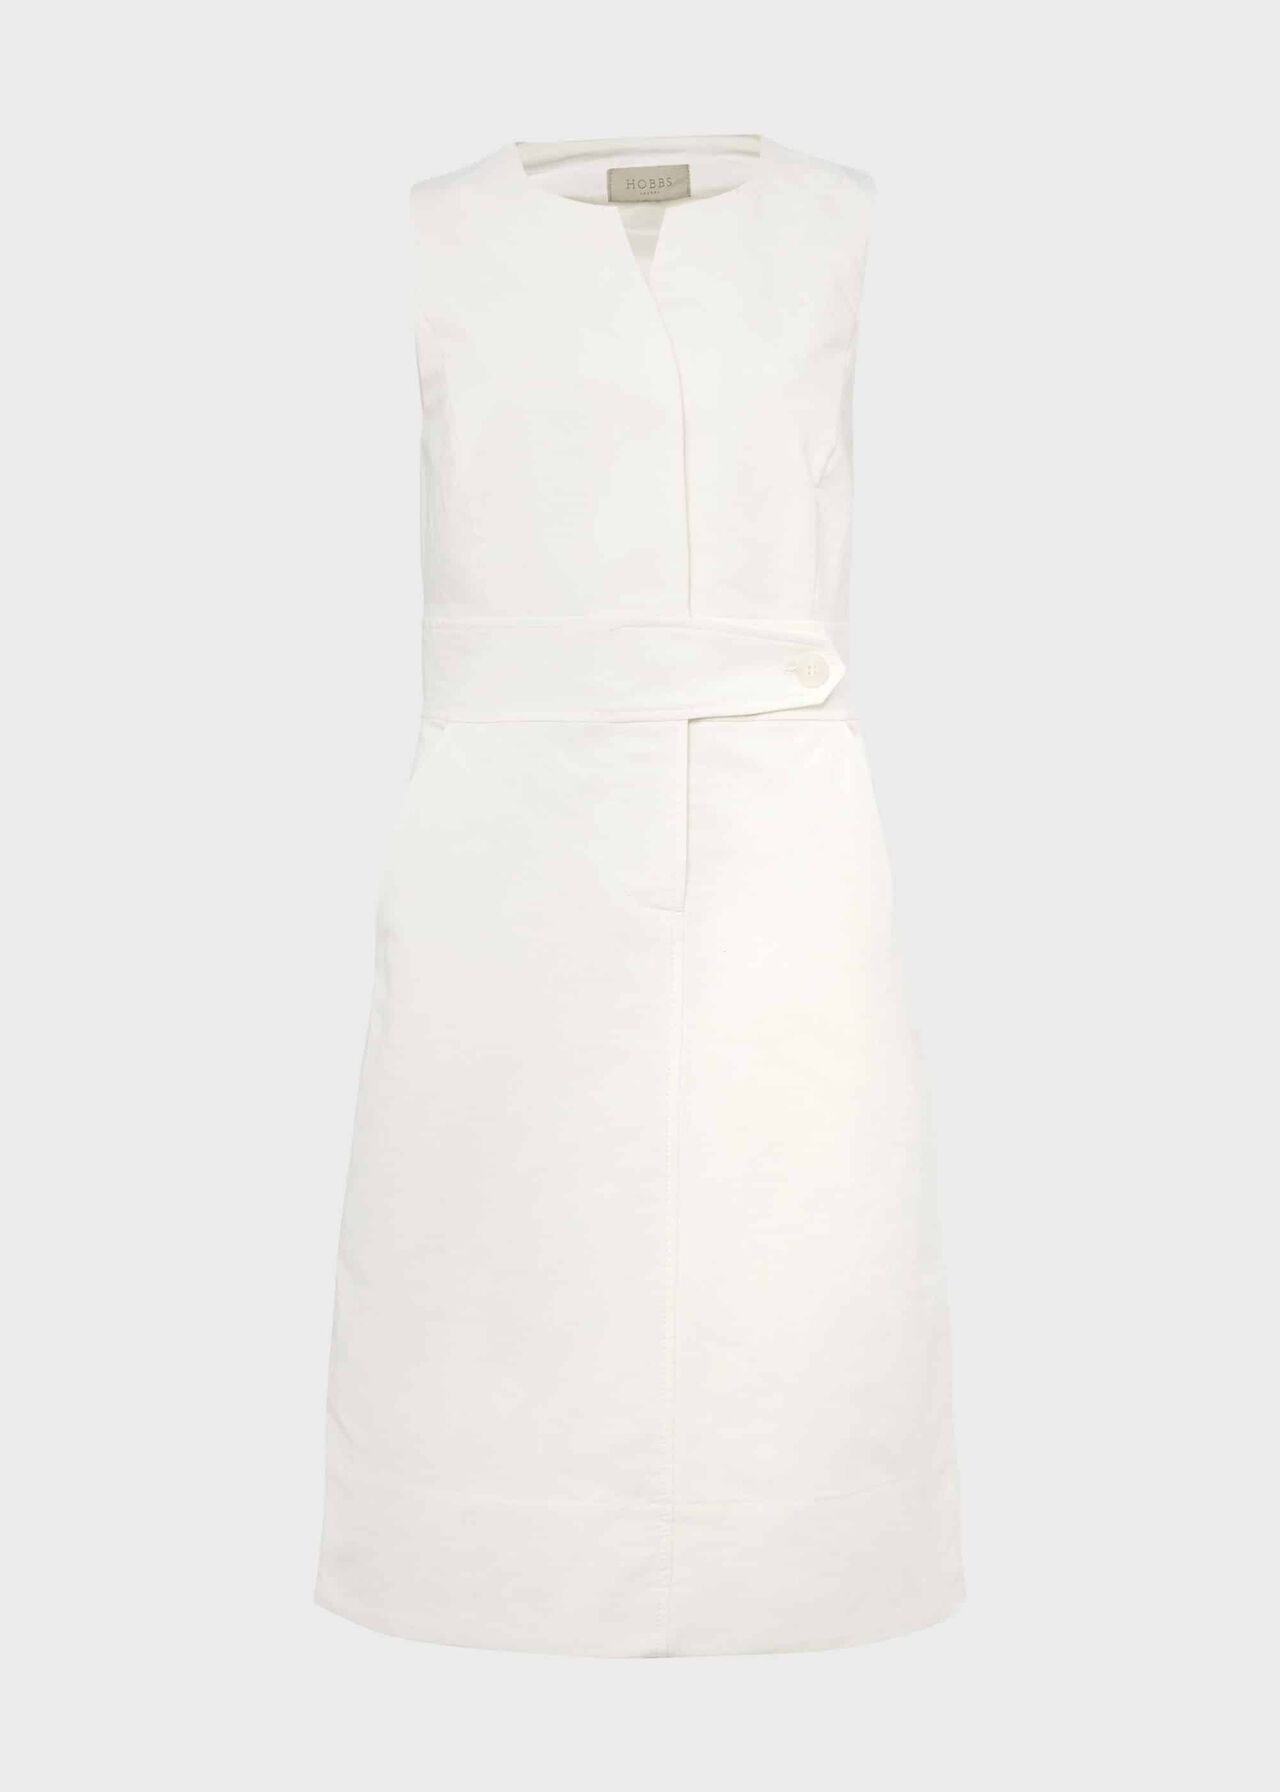 Lucie Cotton Hemp Shift Dress, White, hi-res